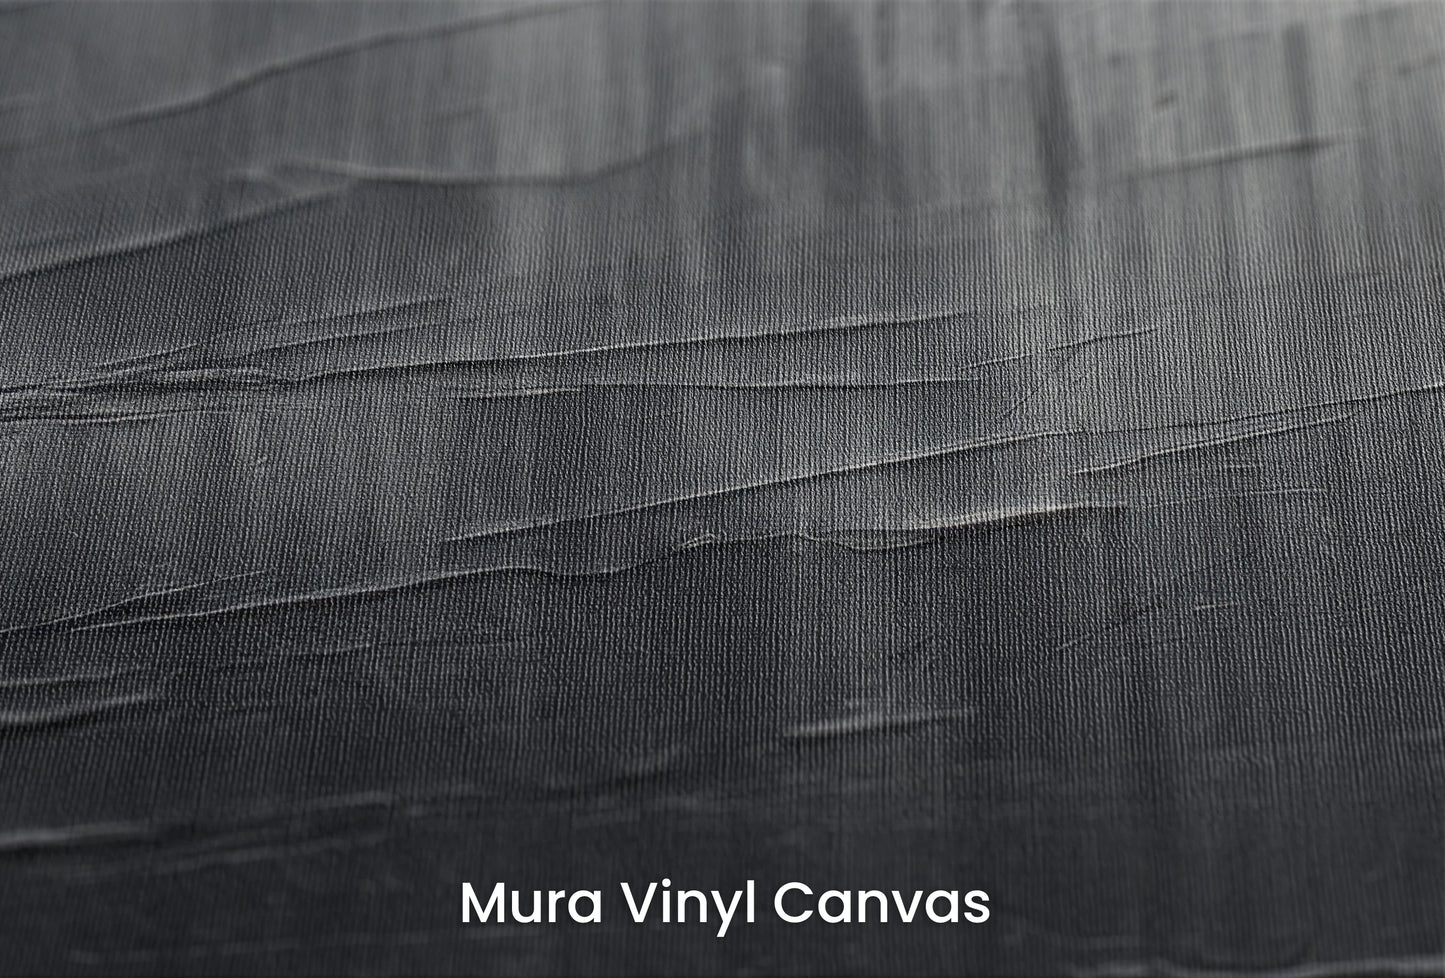 Zbliżenie na artystyczną fototapetę o nazwie Silver Strokes na podłożu Mura Vinyl Canvas - faktura naturalnego płótna.